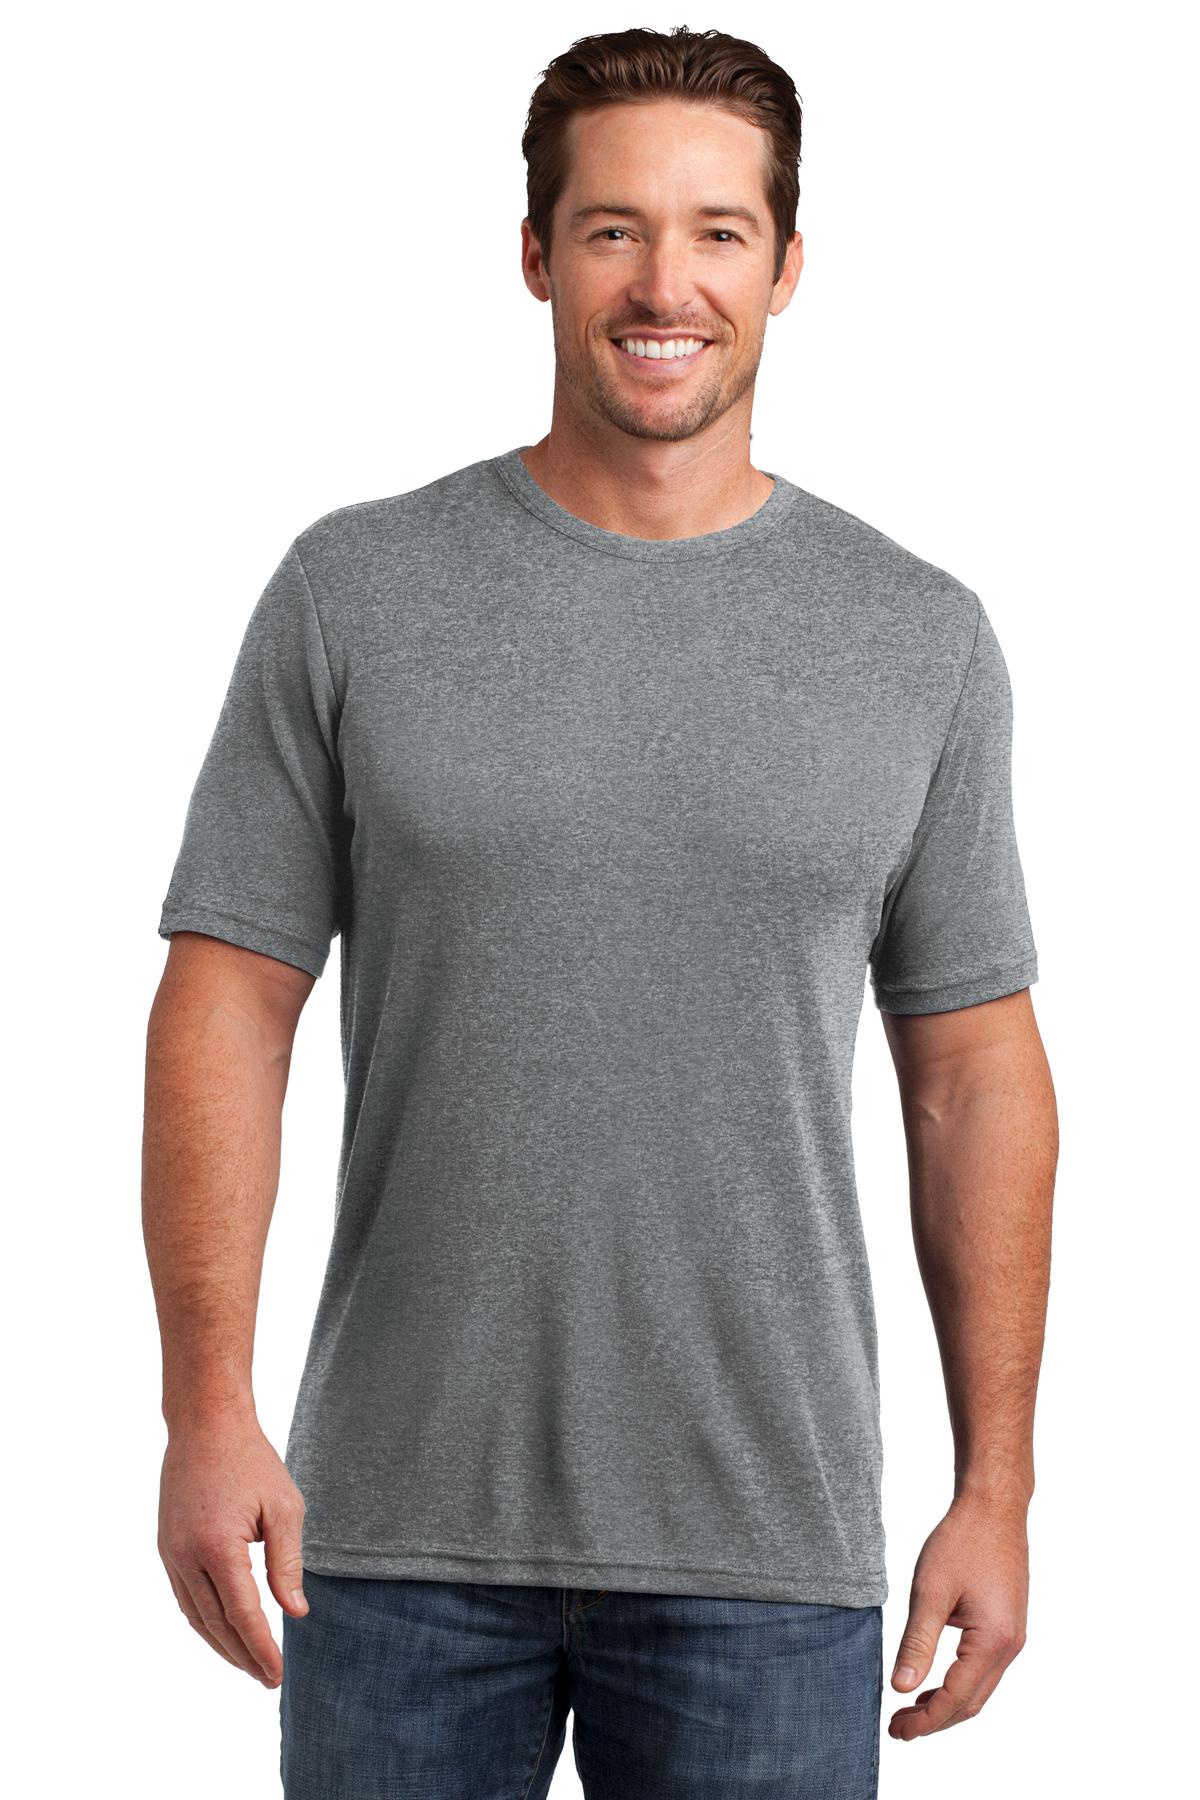 T-Shirts-100-Cotton-37